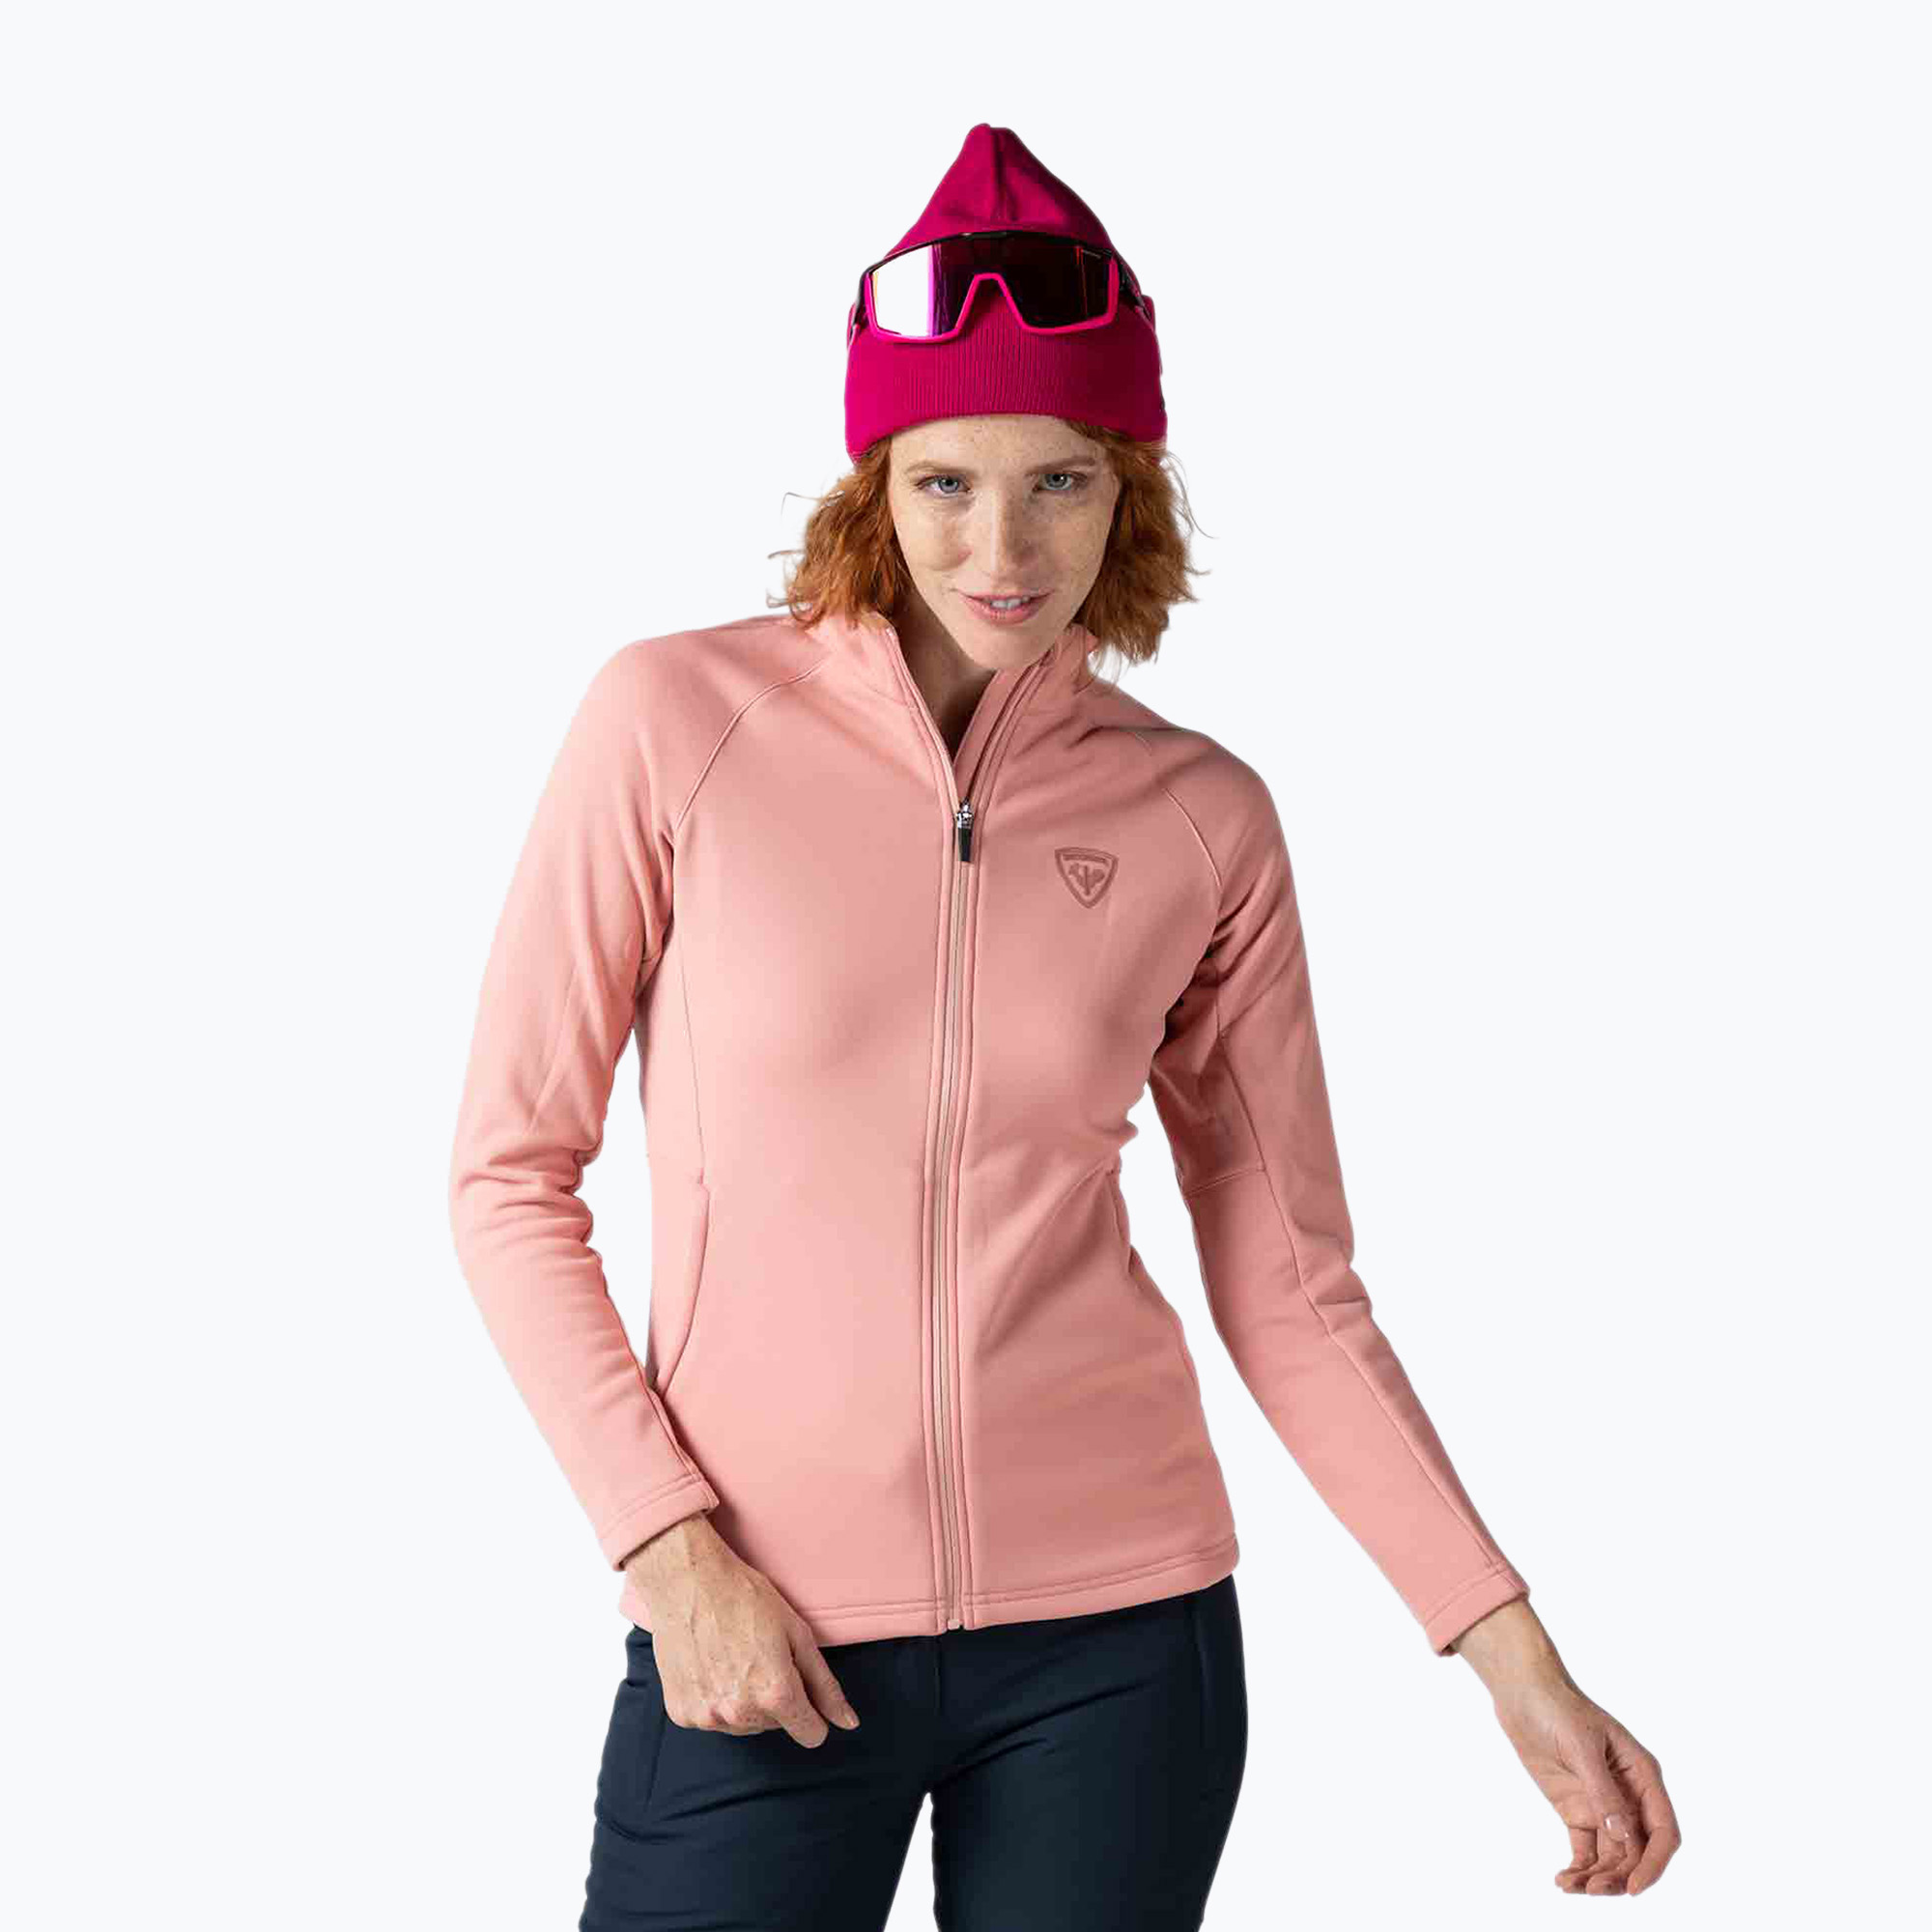 Дамски ски суитшърт Rossignol Classique Clim cooper pink